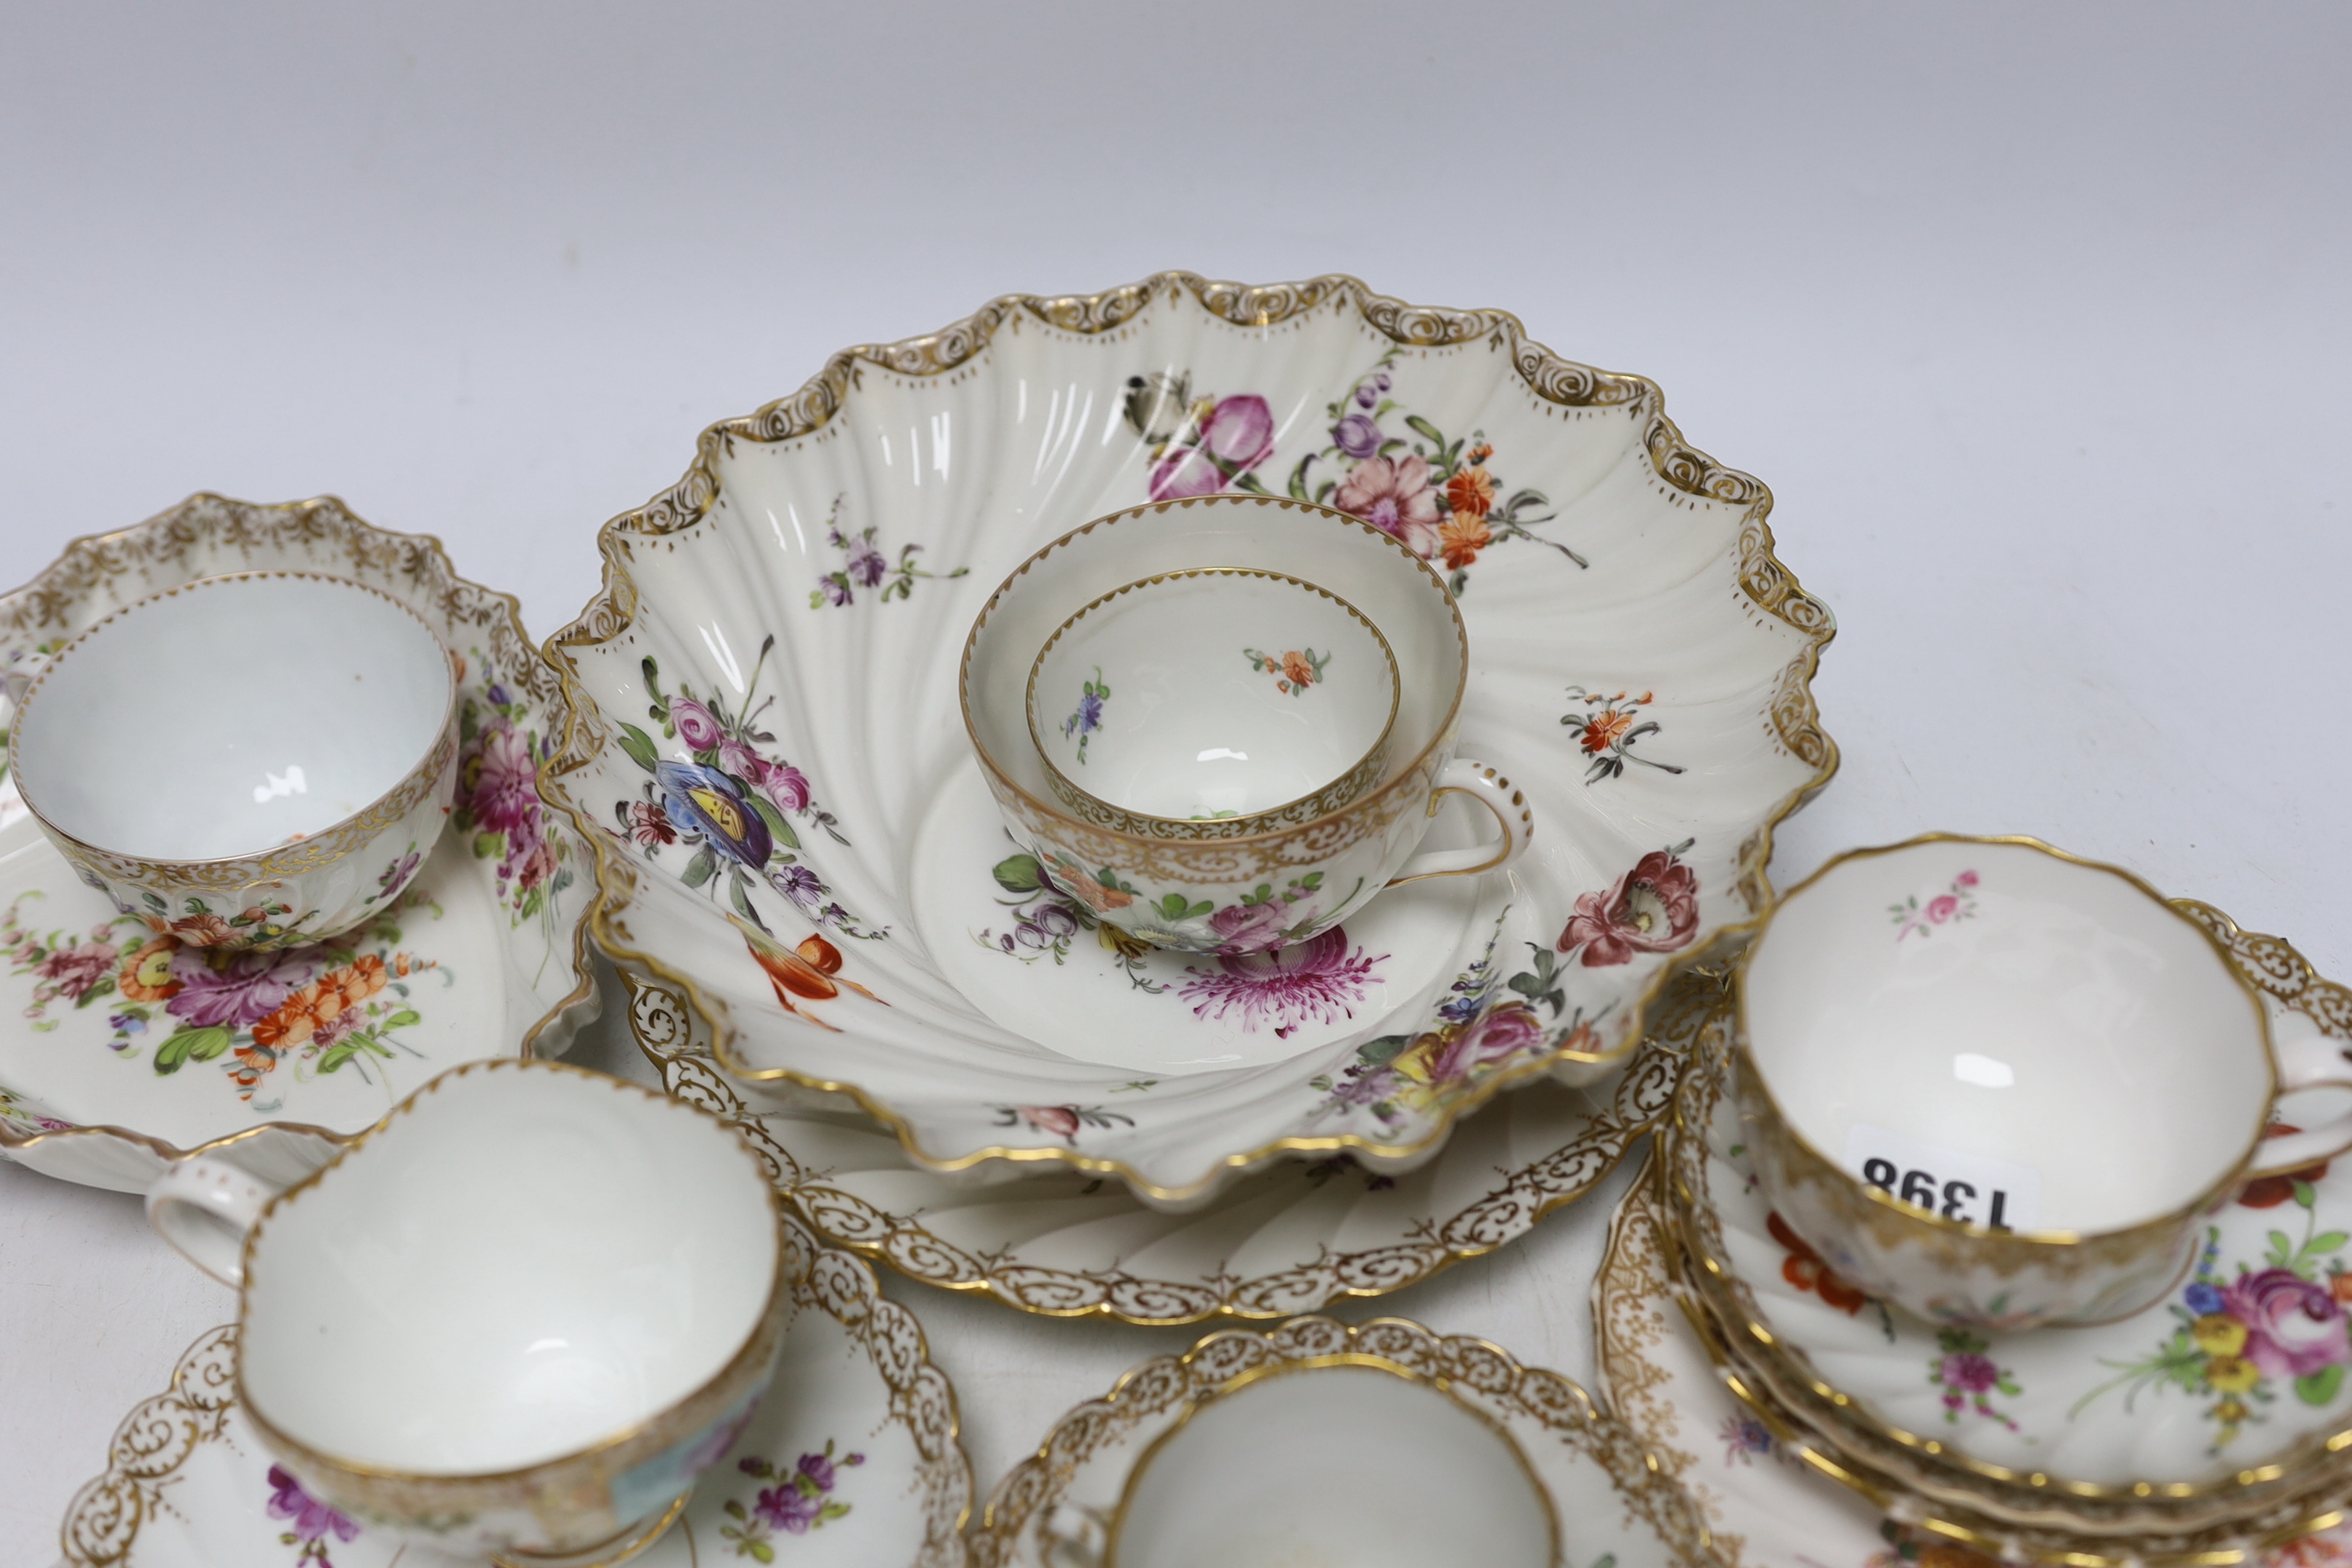 A group of Dresden porcelain floral tea wares, largest 24cm in diameter